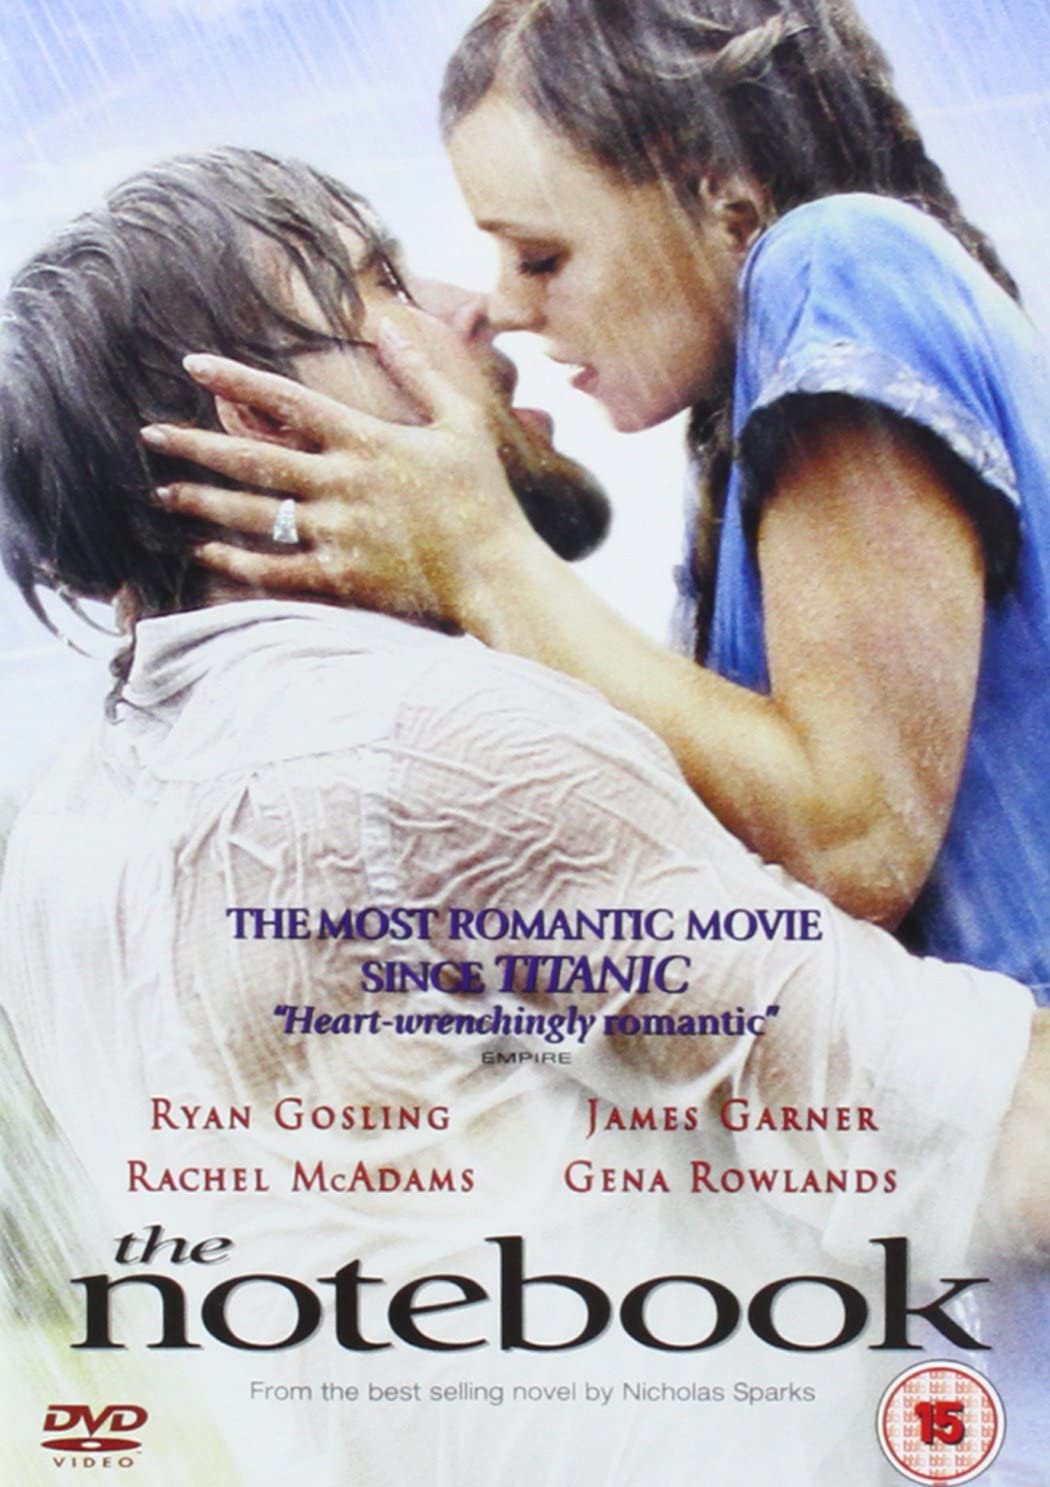 Das Notizbuch - Romantik [DVD]